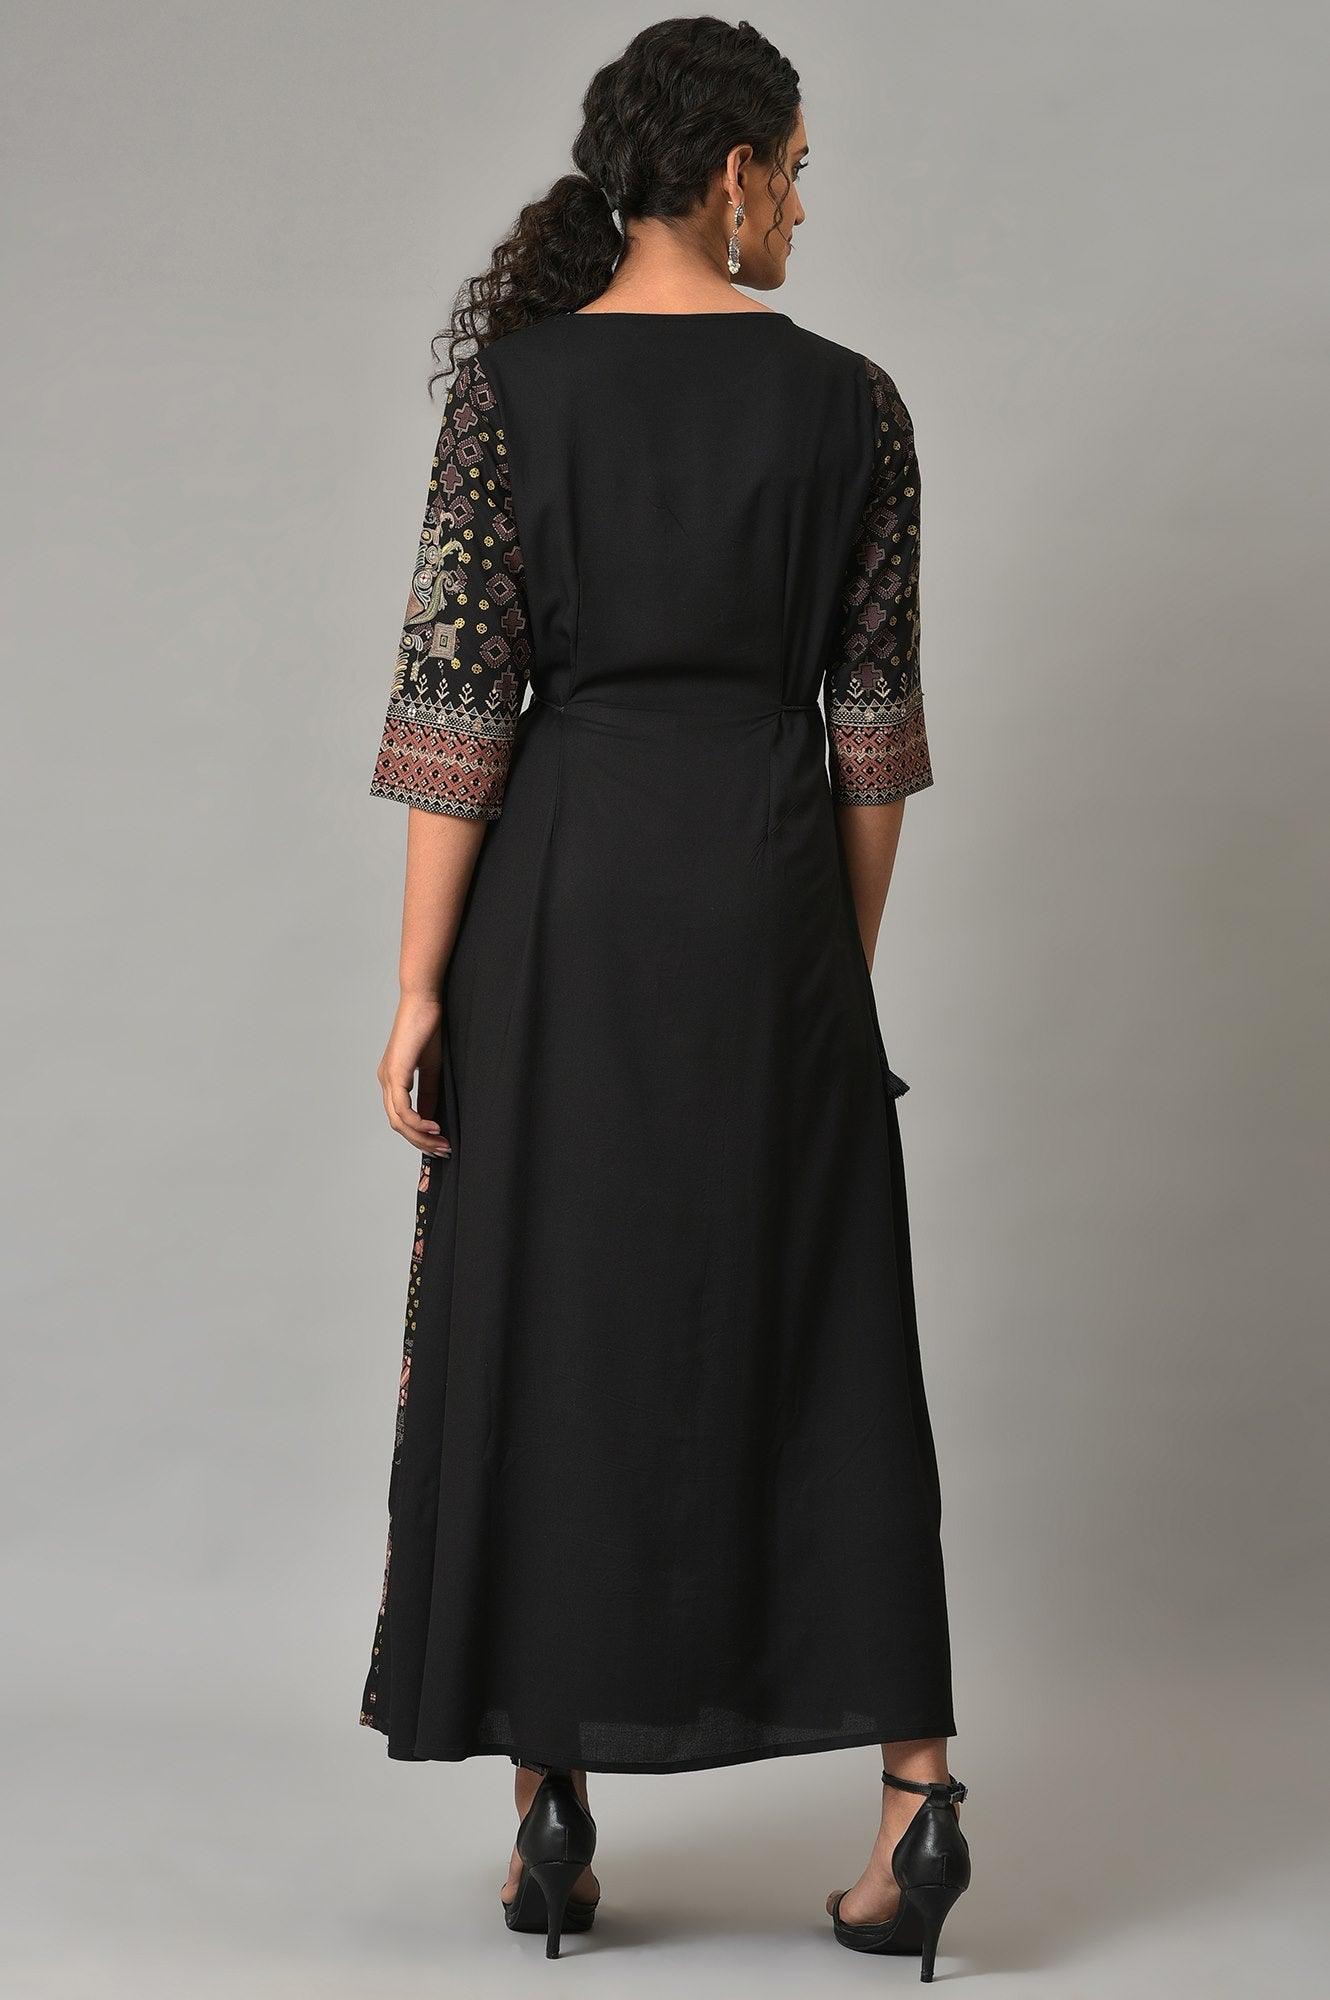 Black Printed Long Dress With Embellished Yoke - wforwoman